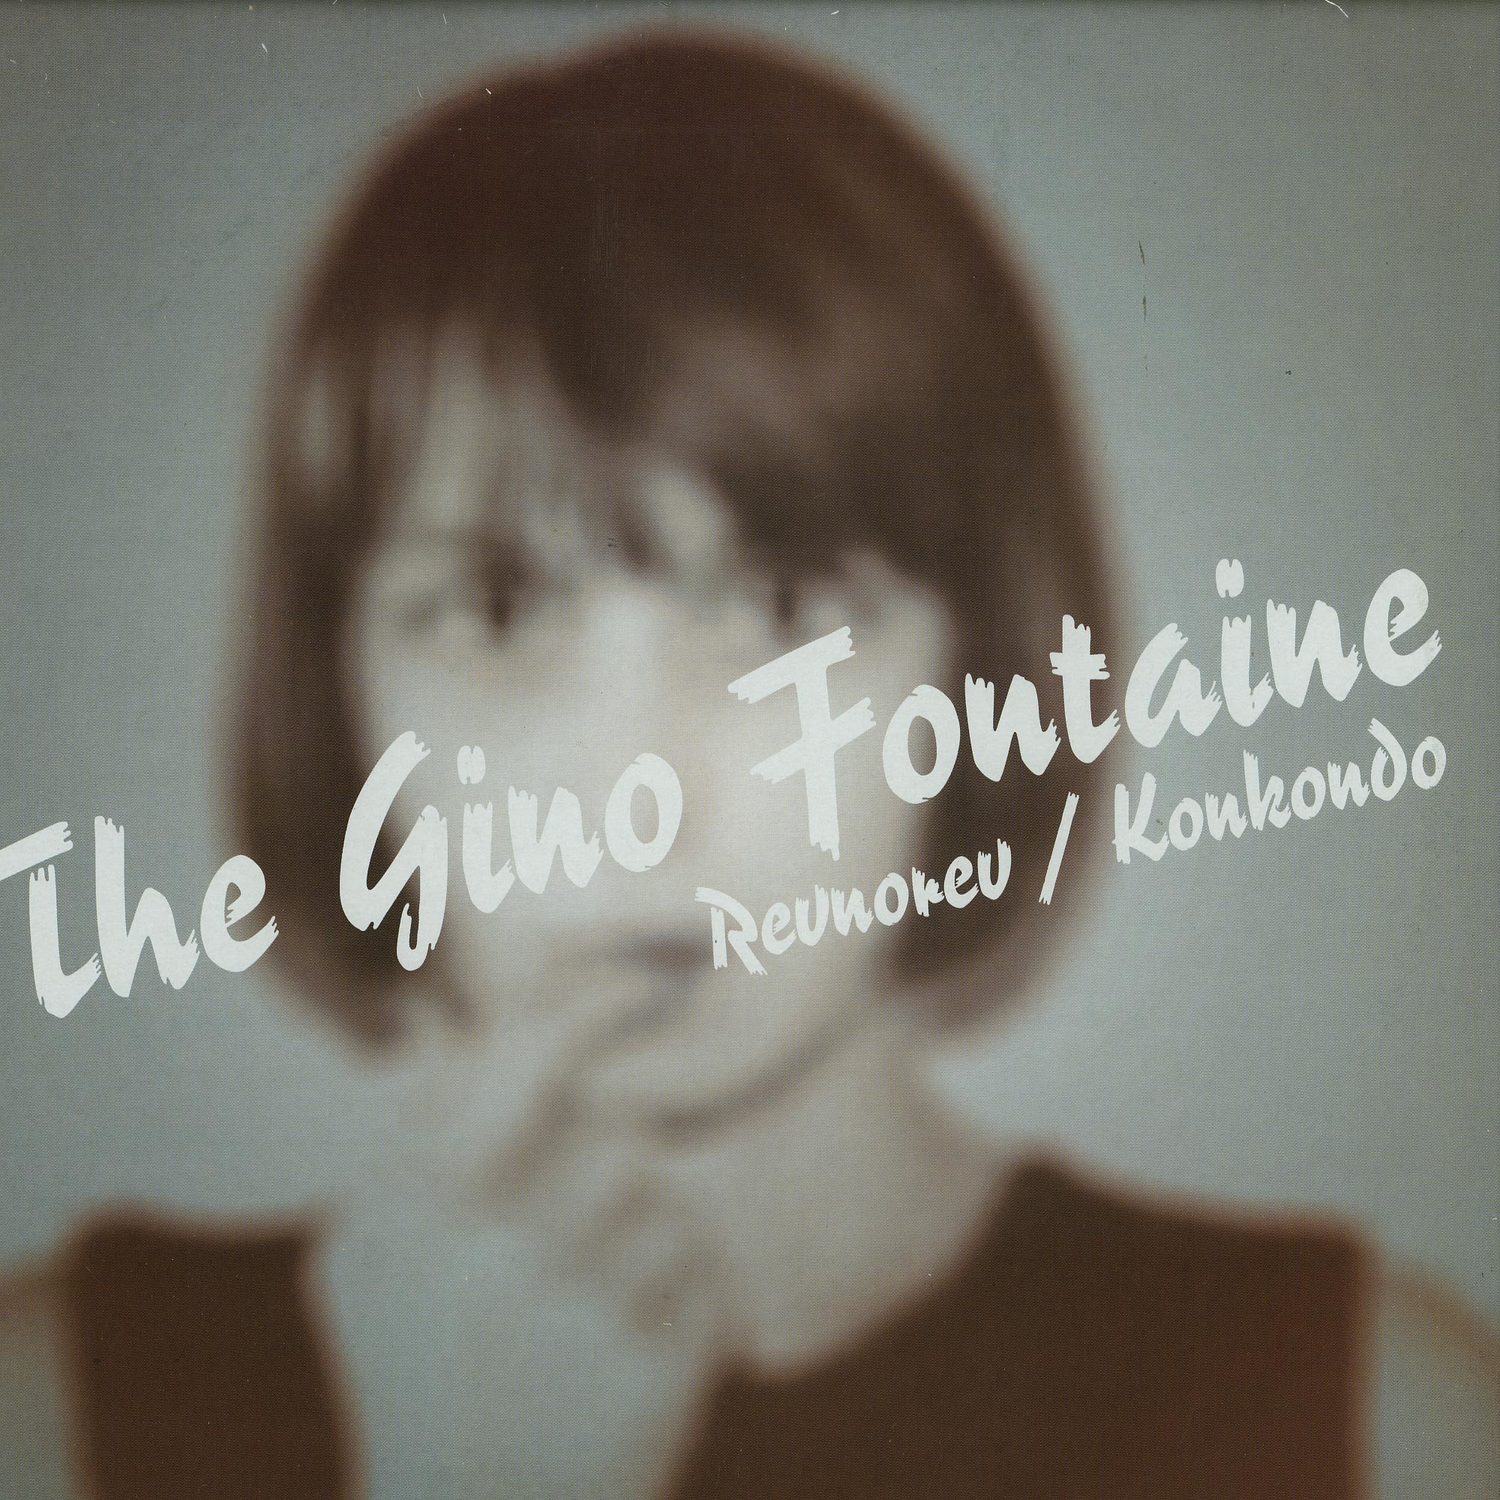 The Gino Fontaine - REVNOREV / KONKONDO